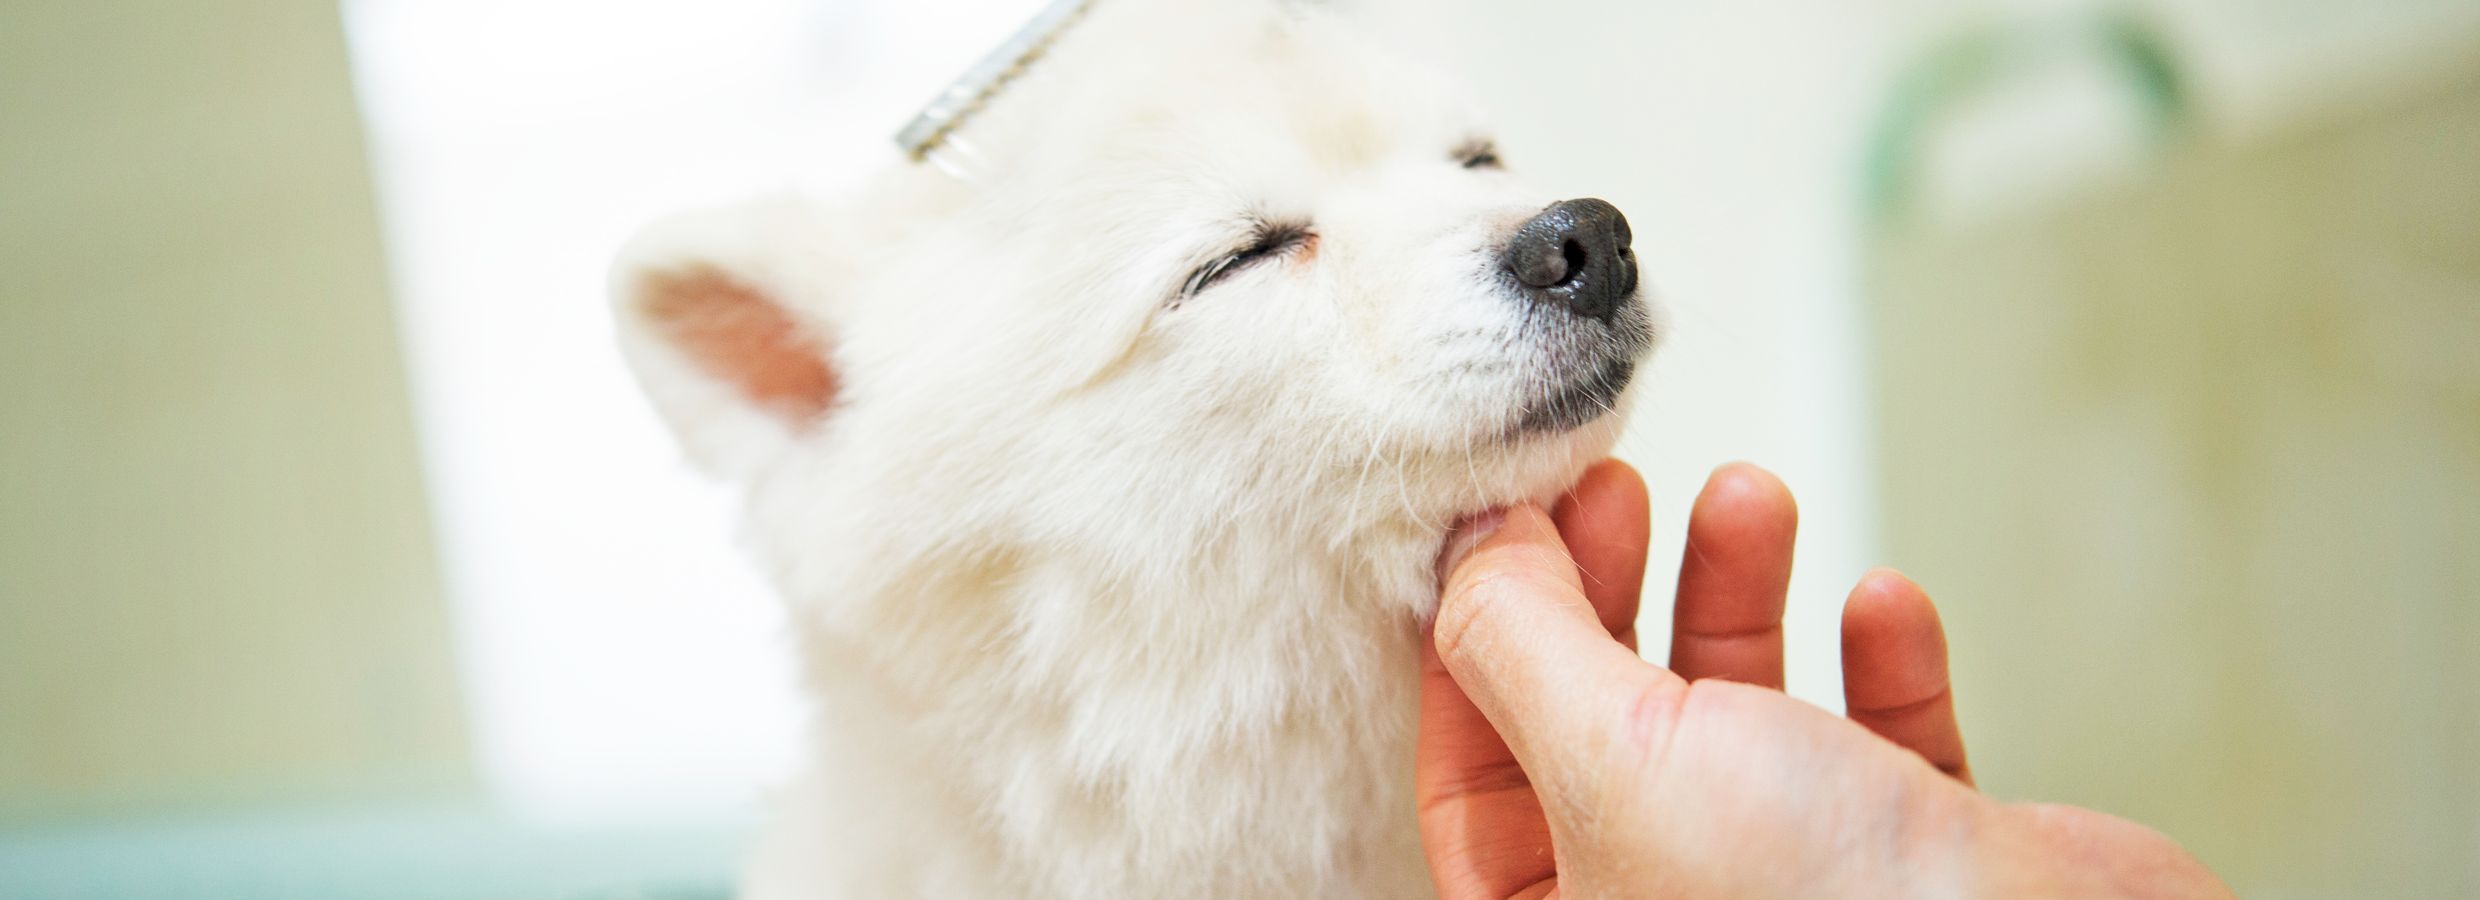 dog brush that cuts hair